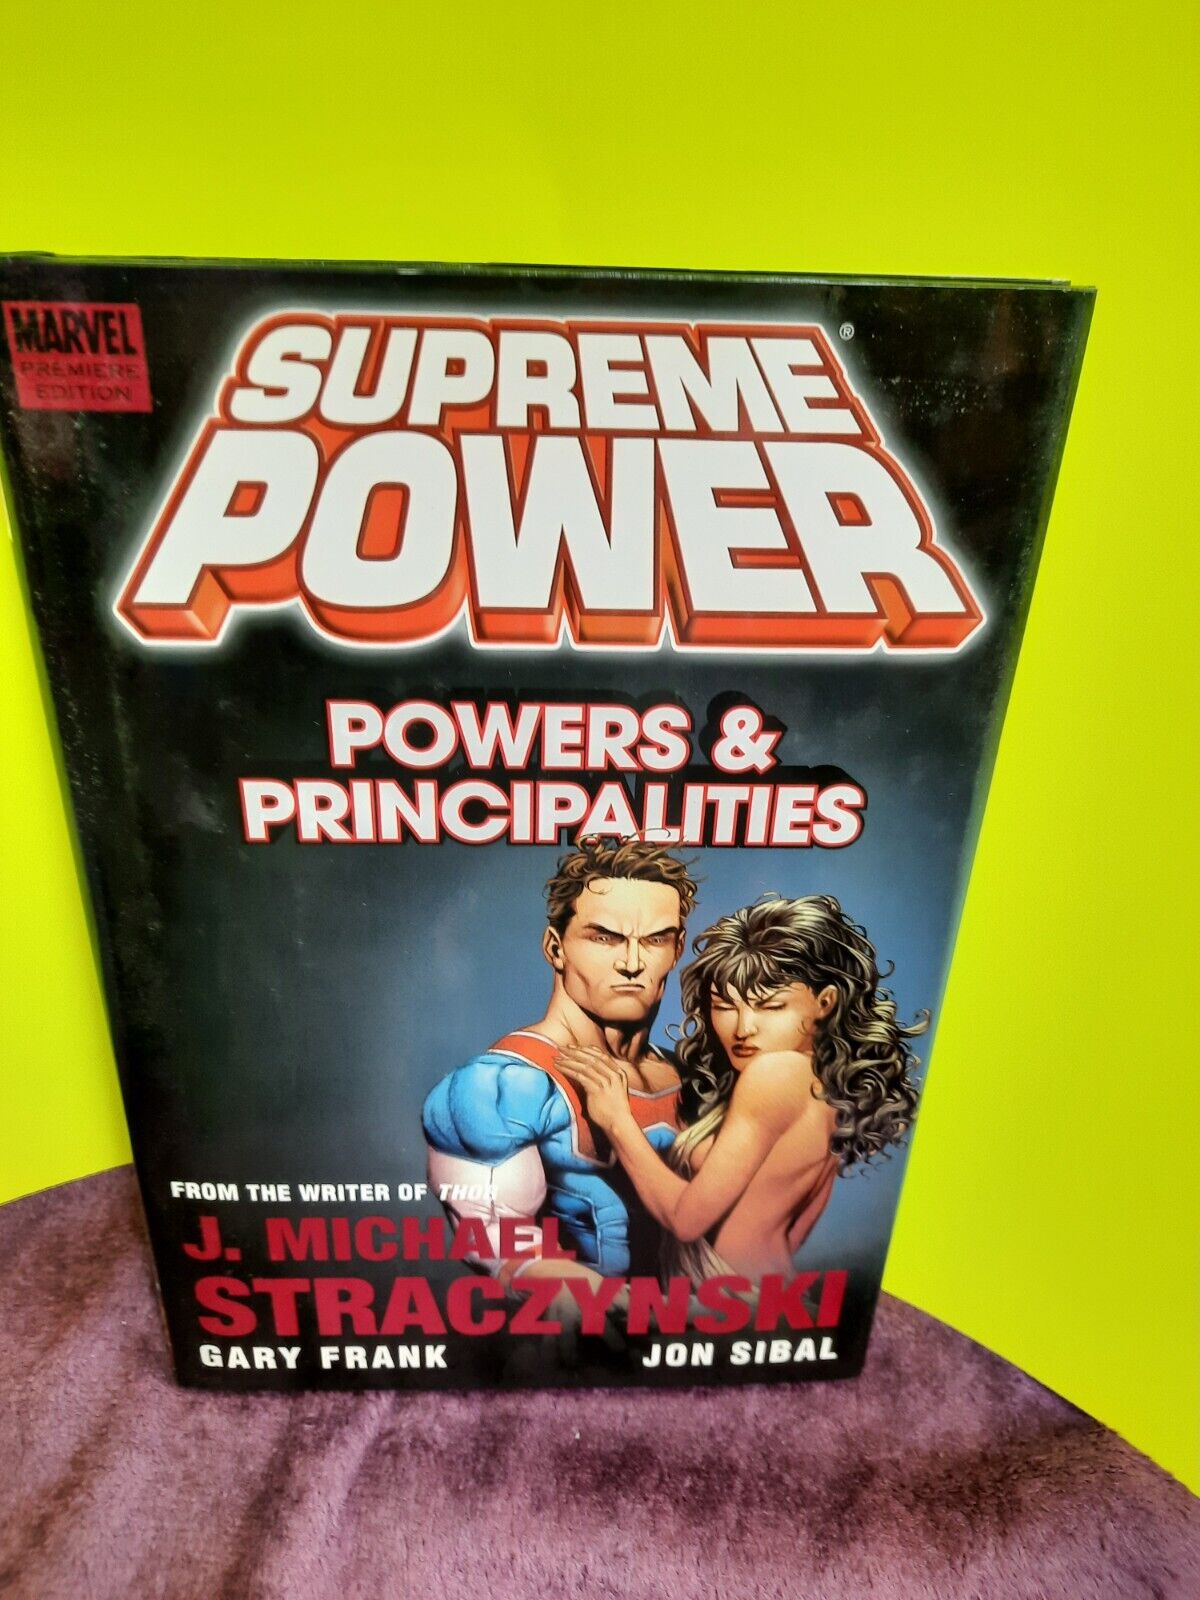 Marvel Comics Supreme Power Powers & Responsibilities hard cover  trade